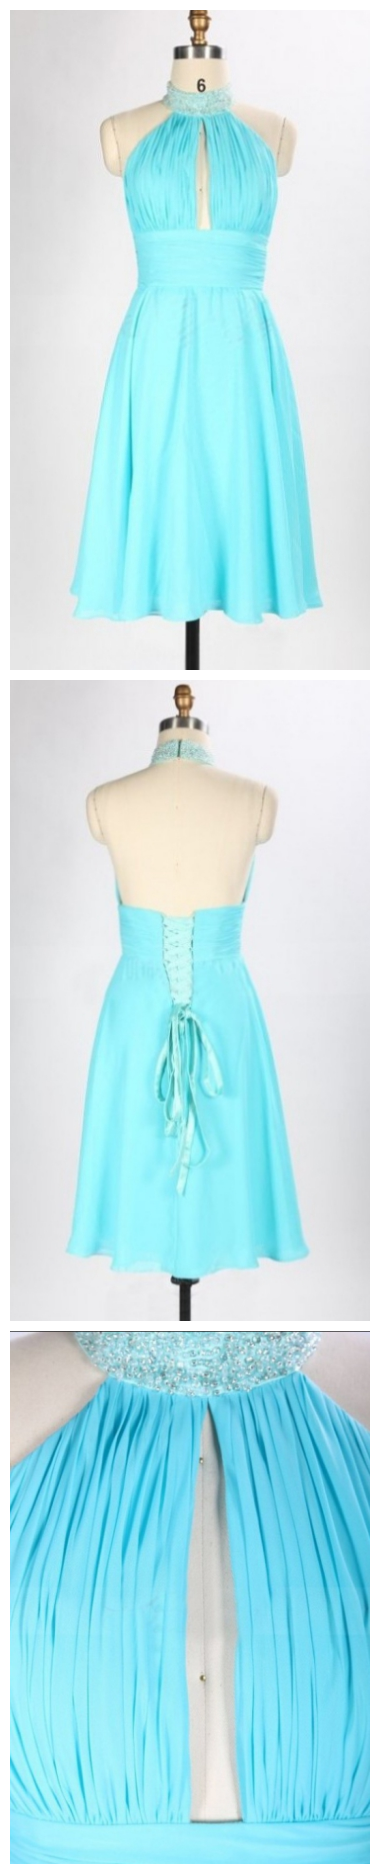 Short Sleeveless Backless Chiffon Short/mini Homecoming Dress Dresses